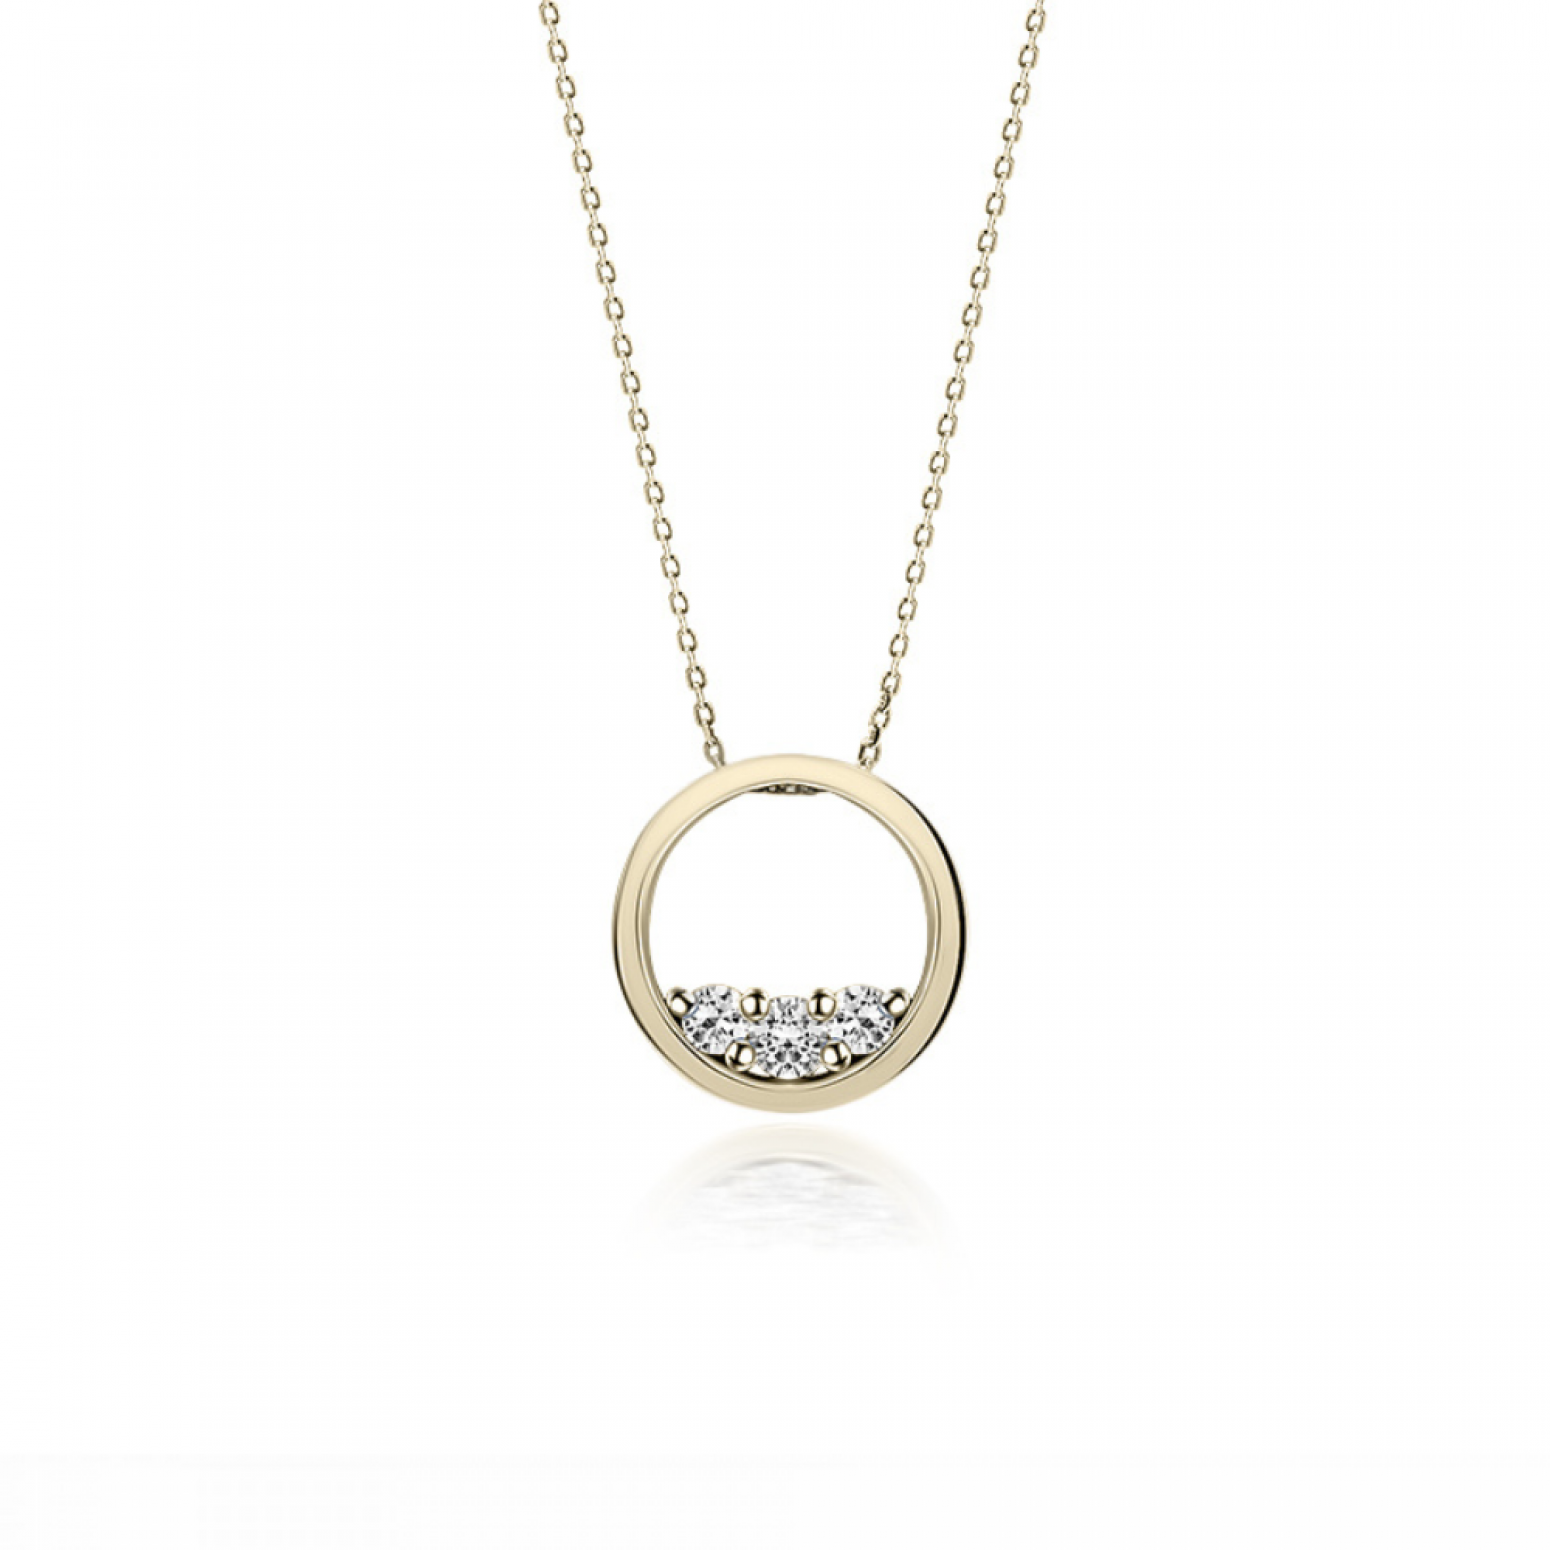 Round necklace, Κ18 gold with diamonds 0.15ct, SI1, H ko5629 NECKLACES Κοσμηματα - chrilia.gr